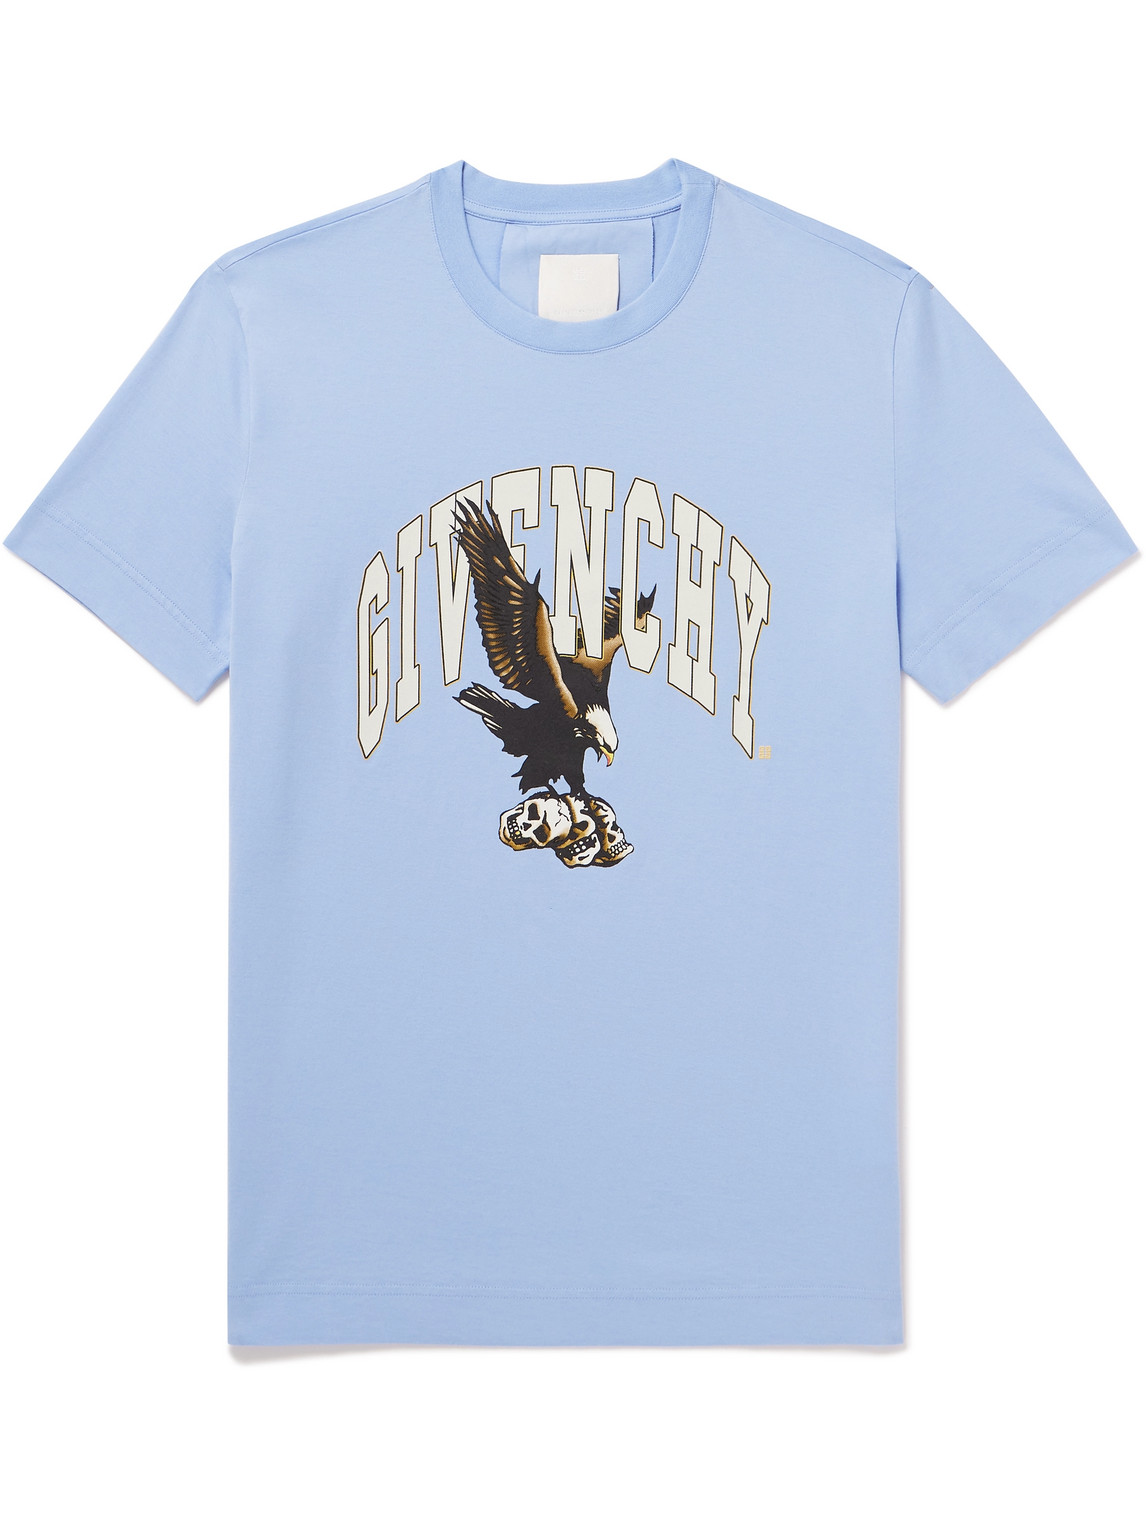 Givenchy - Eagle Logo-Print Cotton-Jersey T-Shirt - Men - Blue - S for Men